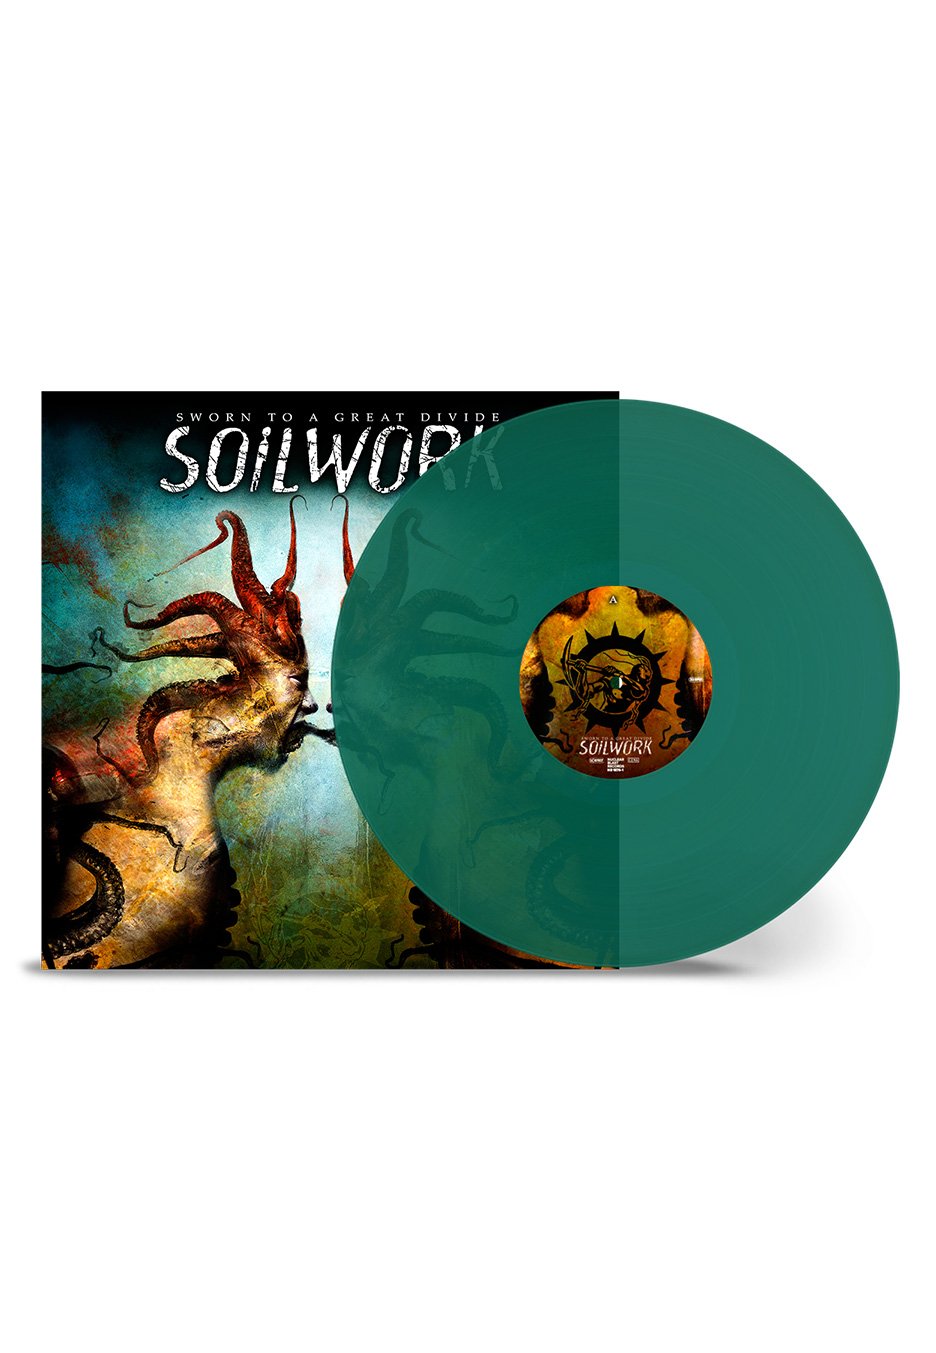 Soilwork - Sworn To A Great Divide Ltd. Transparent Green - Colored Vinyl